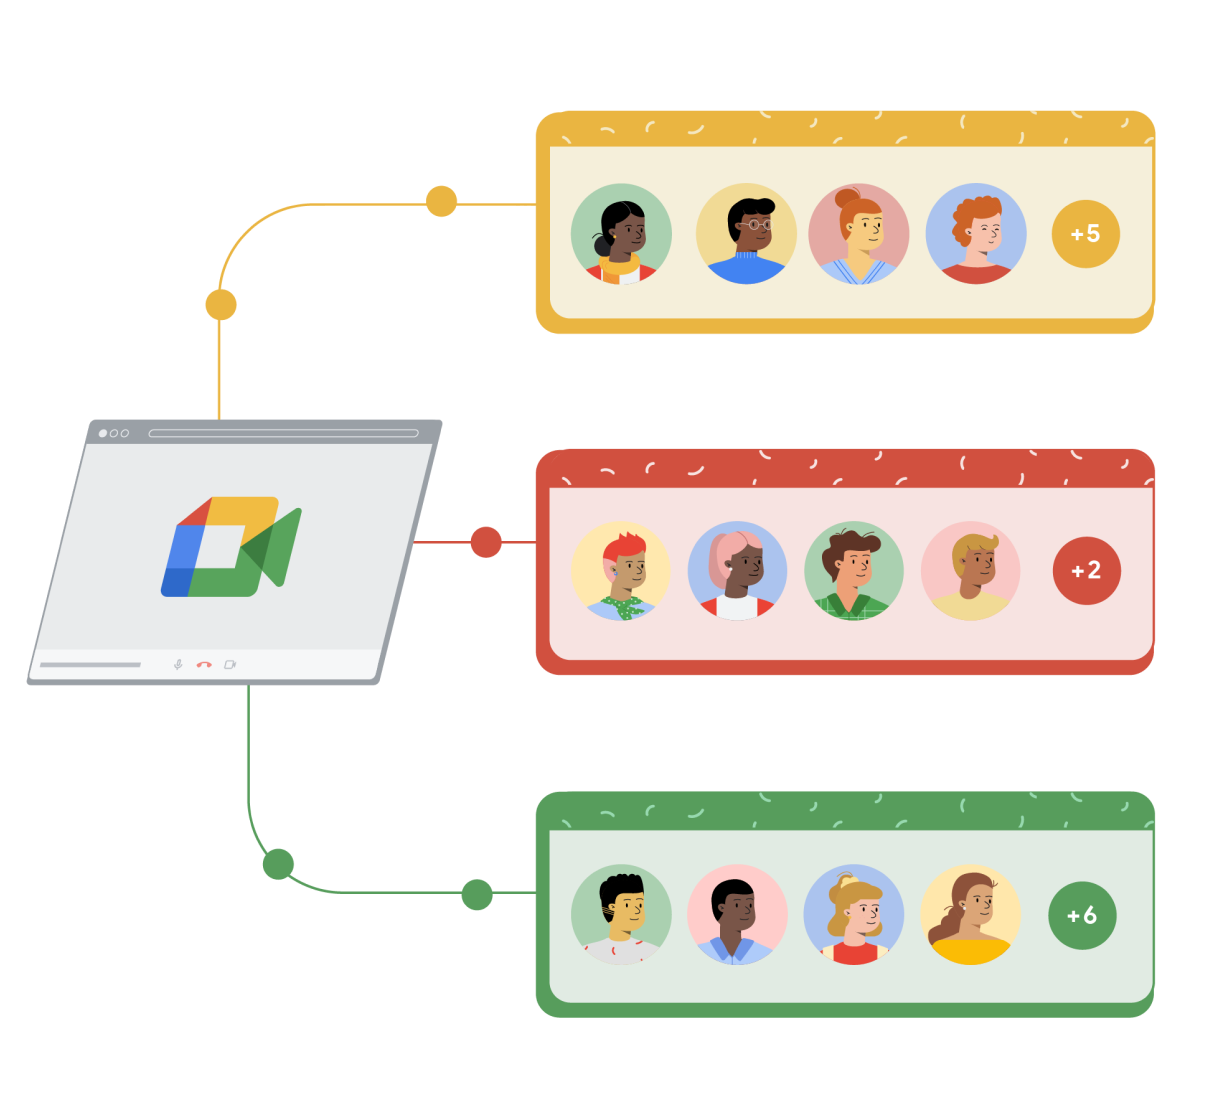 Jendela browser Google Meet ditautkan ke tiga persegi panjang terpisah berwarna kuning, merah, dan hijau. Masing-masing persegi panjang menampilkan empat manusia kartun dalam beberapa lingkaran dan terdapat lingkaran ke-5 di sebelah kanan dengan tanda tambah beserta angka yang menunjukkan jumlah orang lainnya pada panggilan Google Meet.